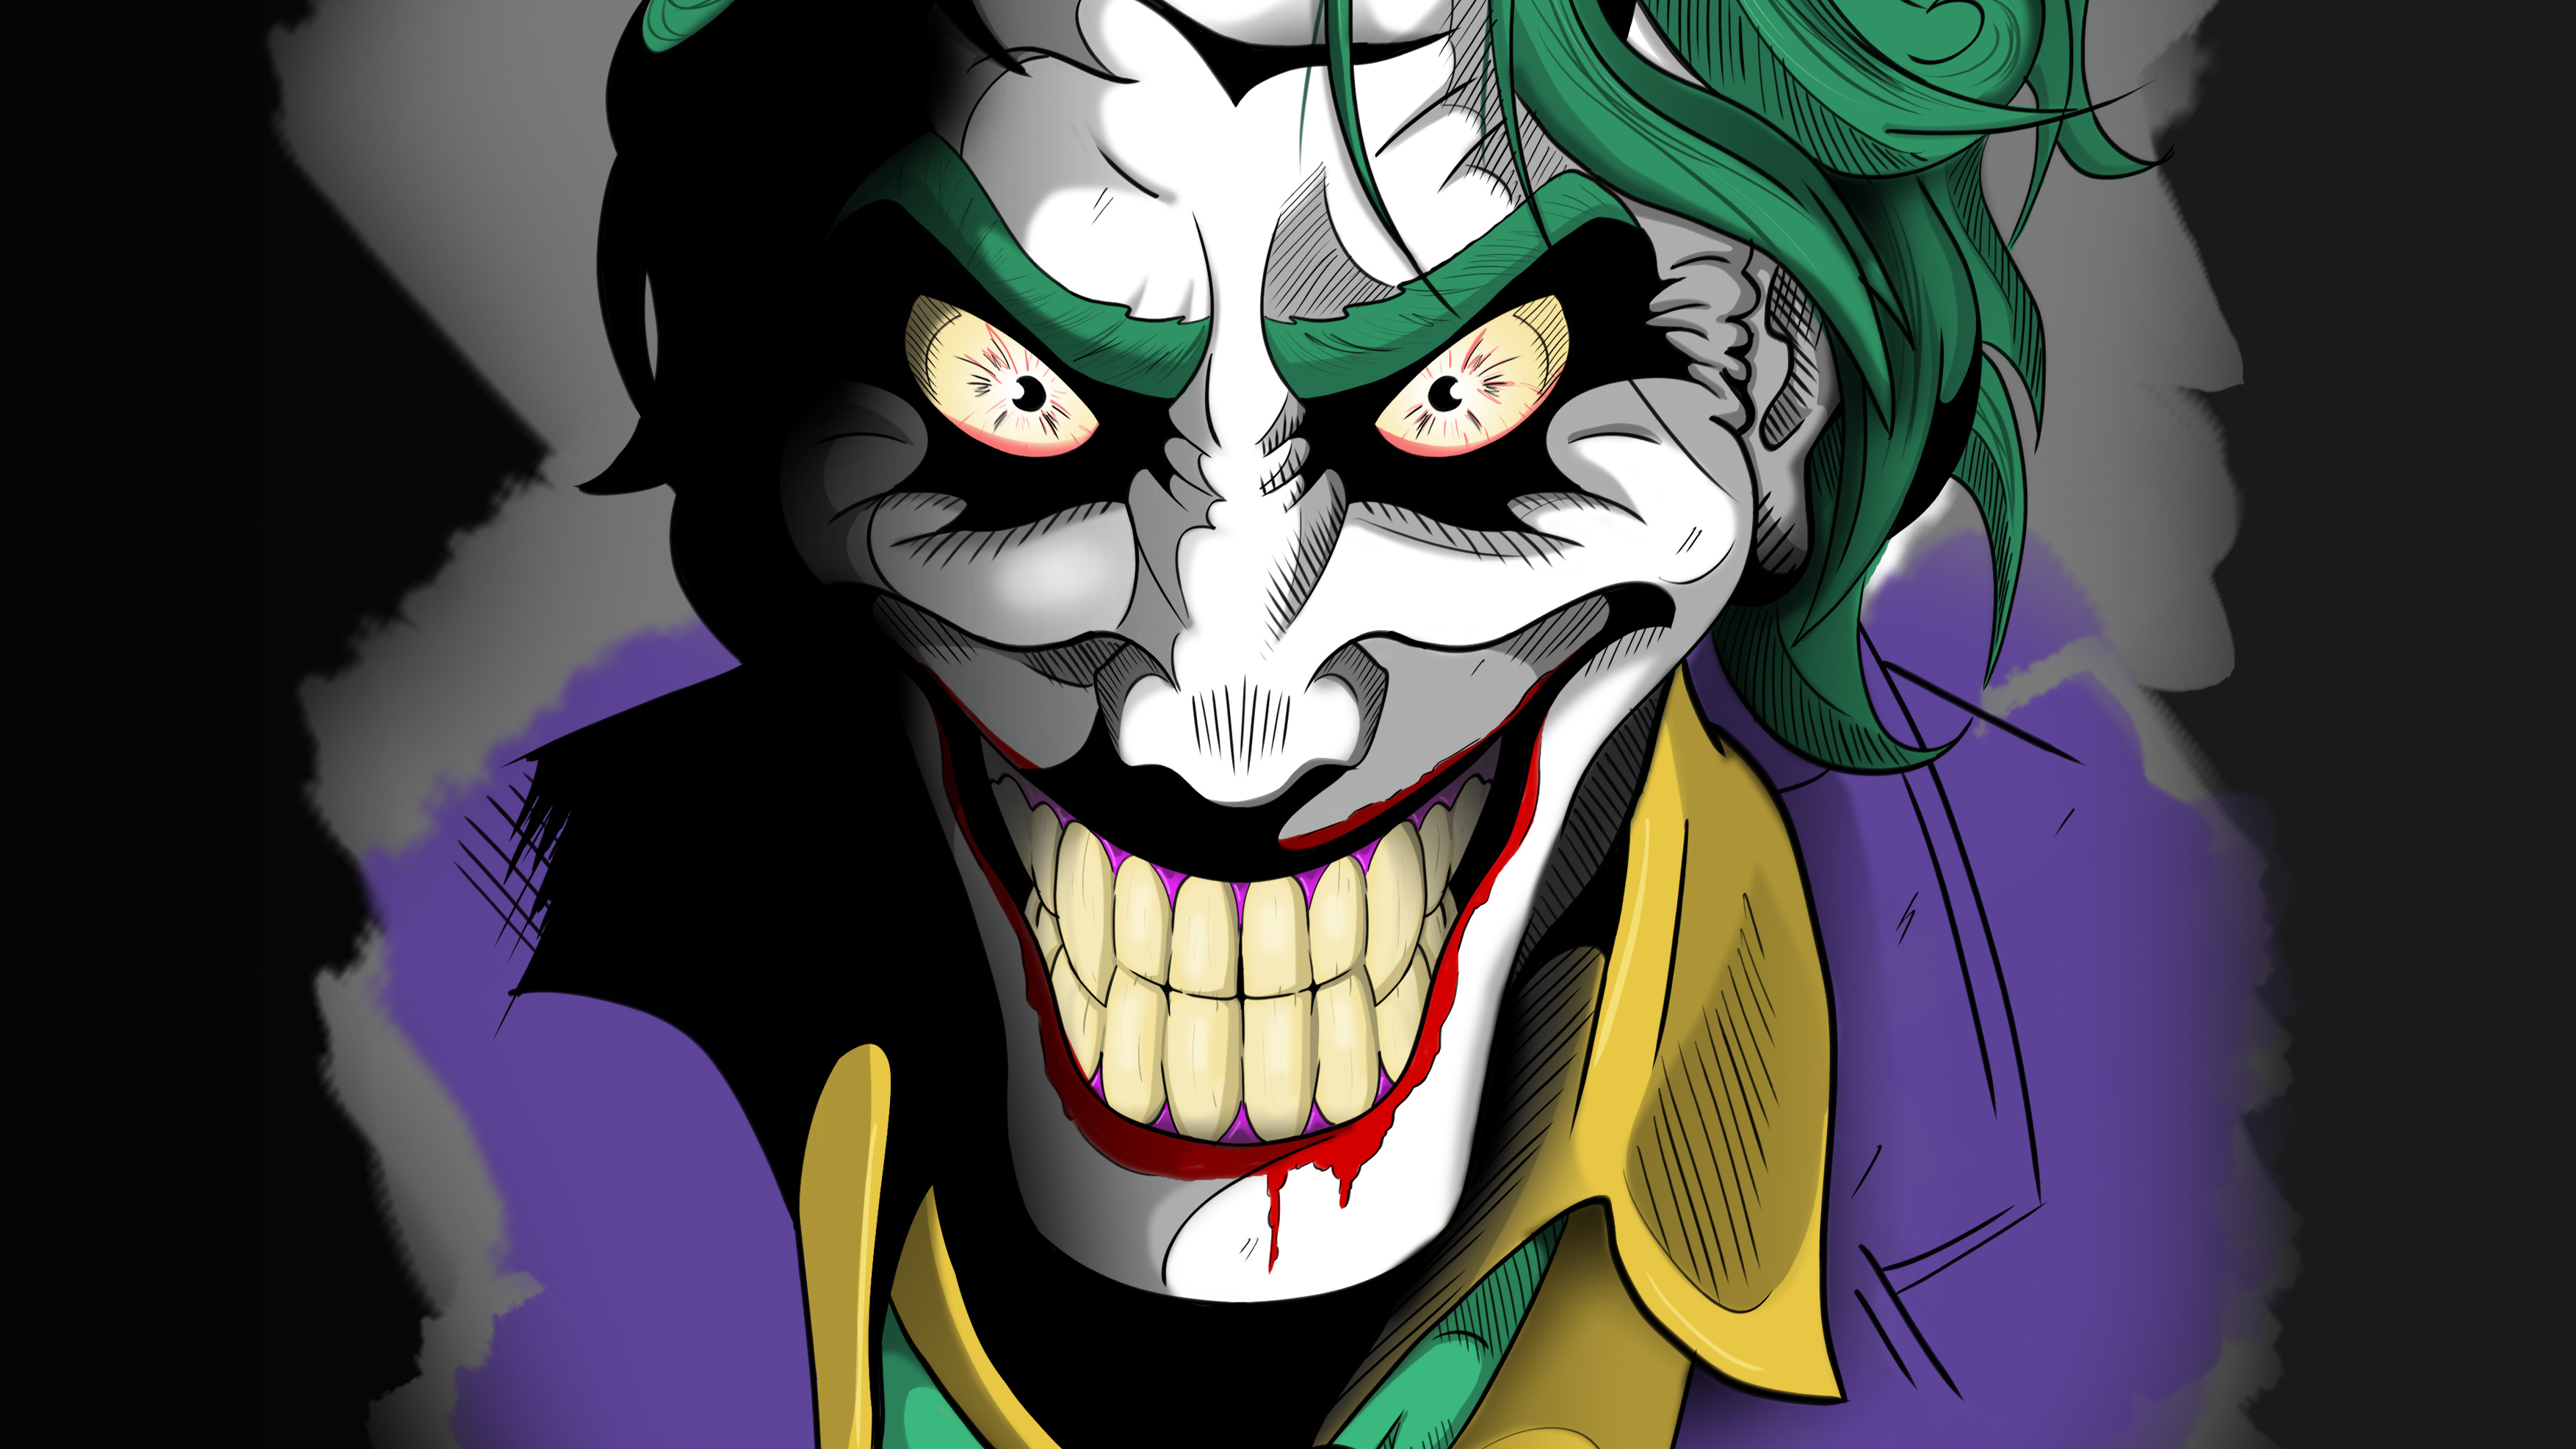 Joker 2019 Image Cartoon - HD Wallpaper 